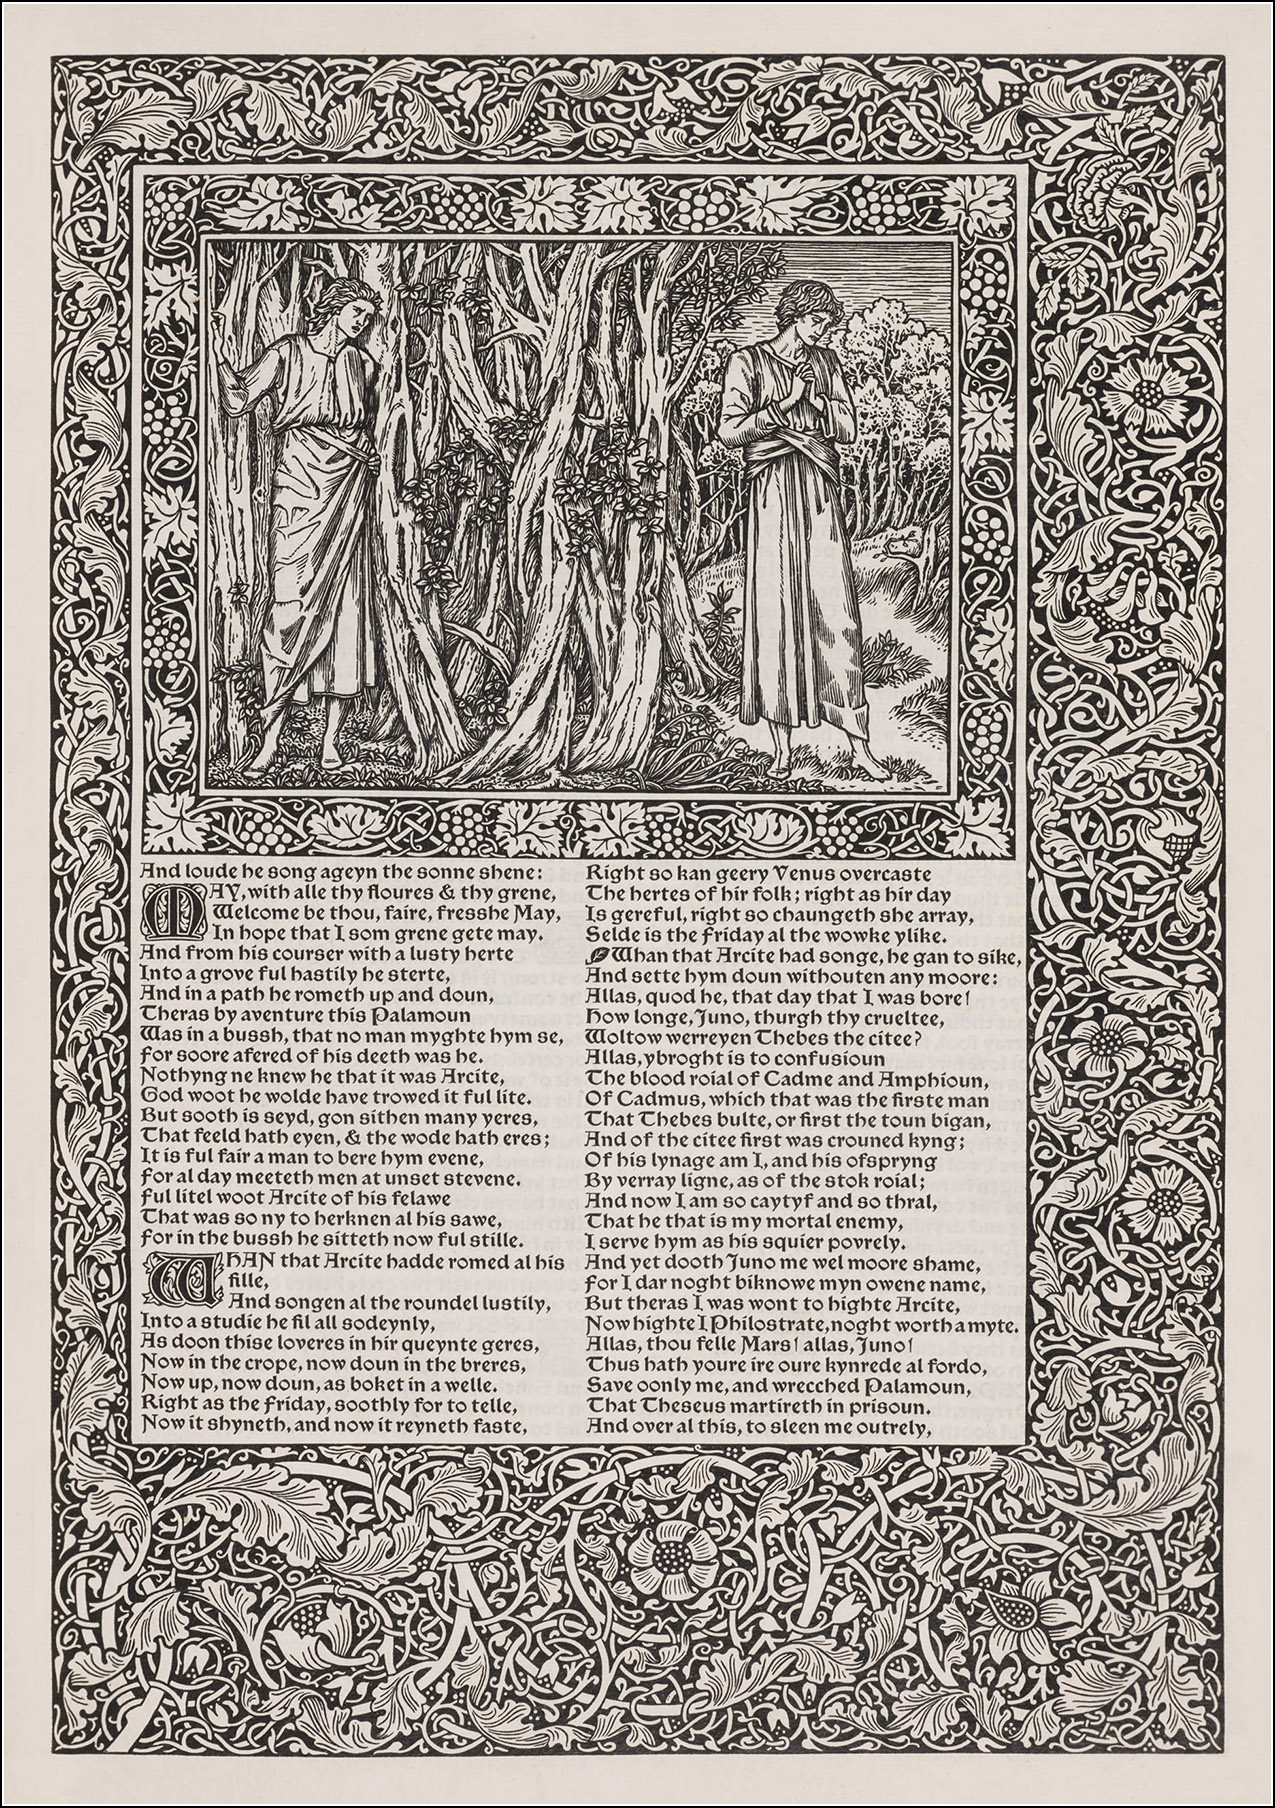 Edward Coley Burne-Jones, The works of Geoffrey Chaucer